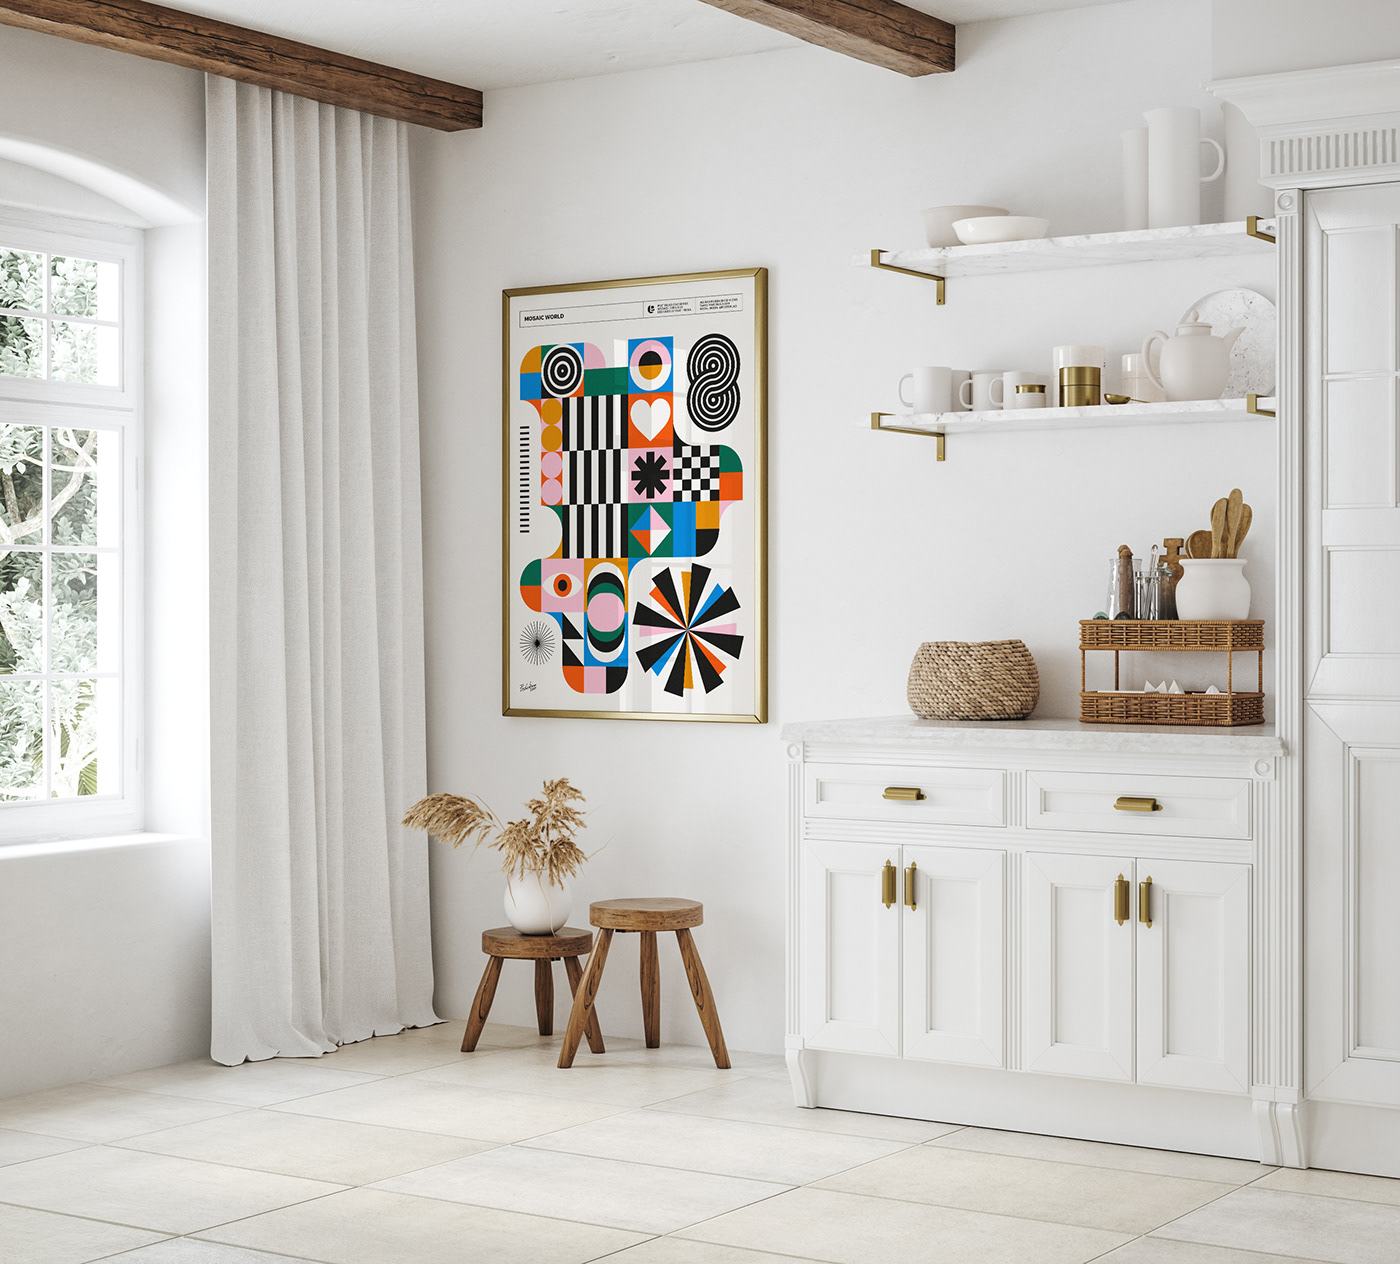 bauhaus Digital Art  home decor interior design  minimal minimalist modern poster print wall art